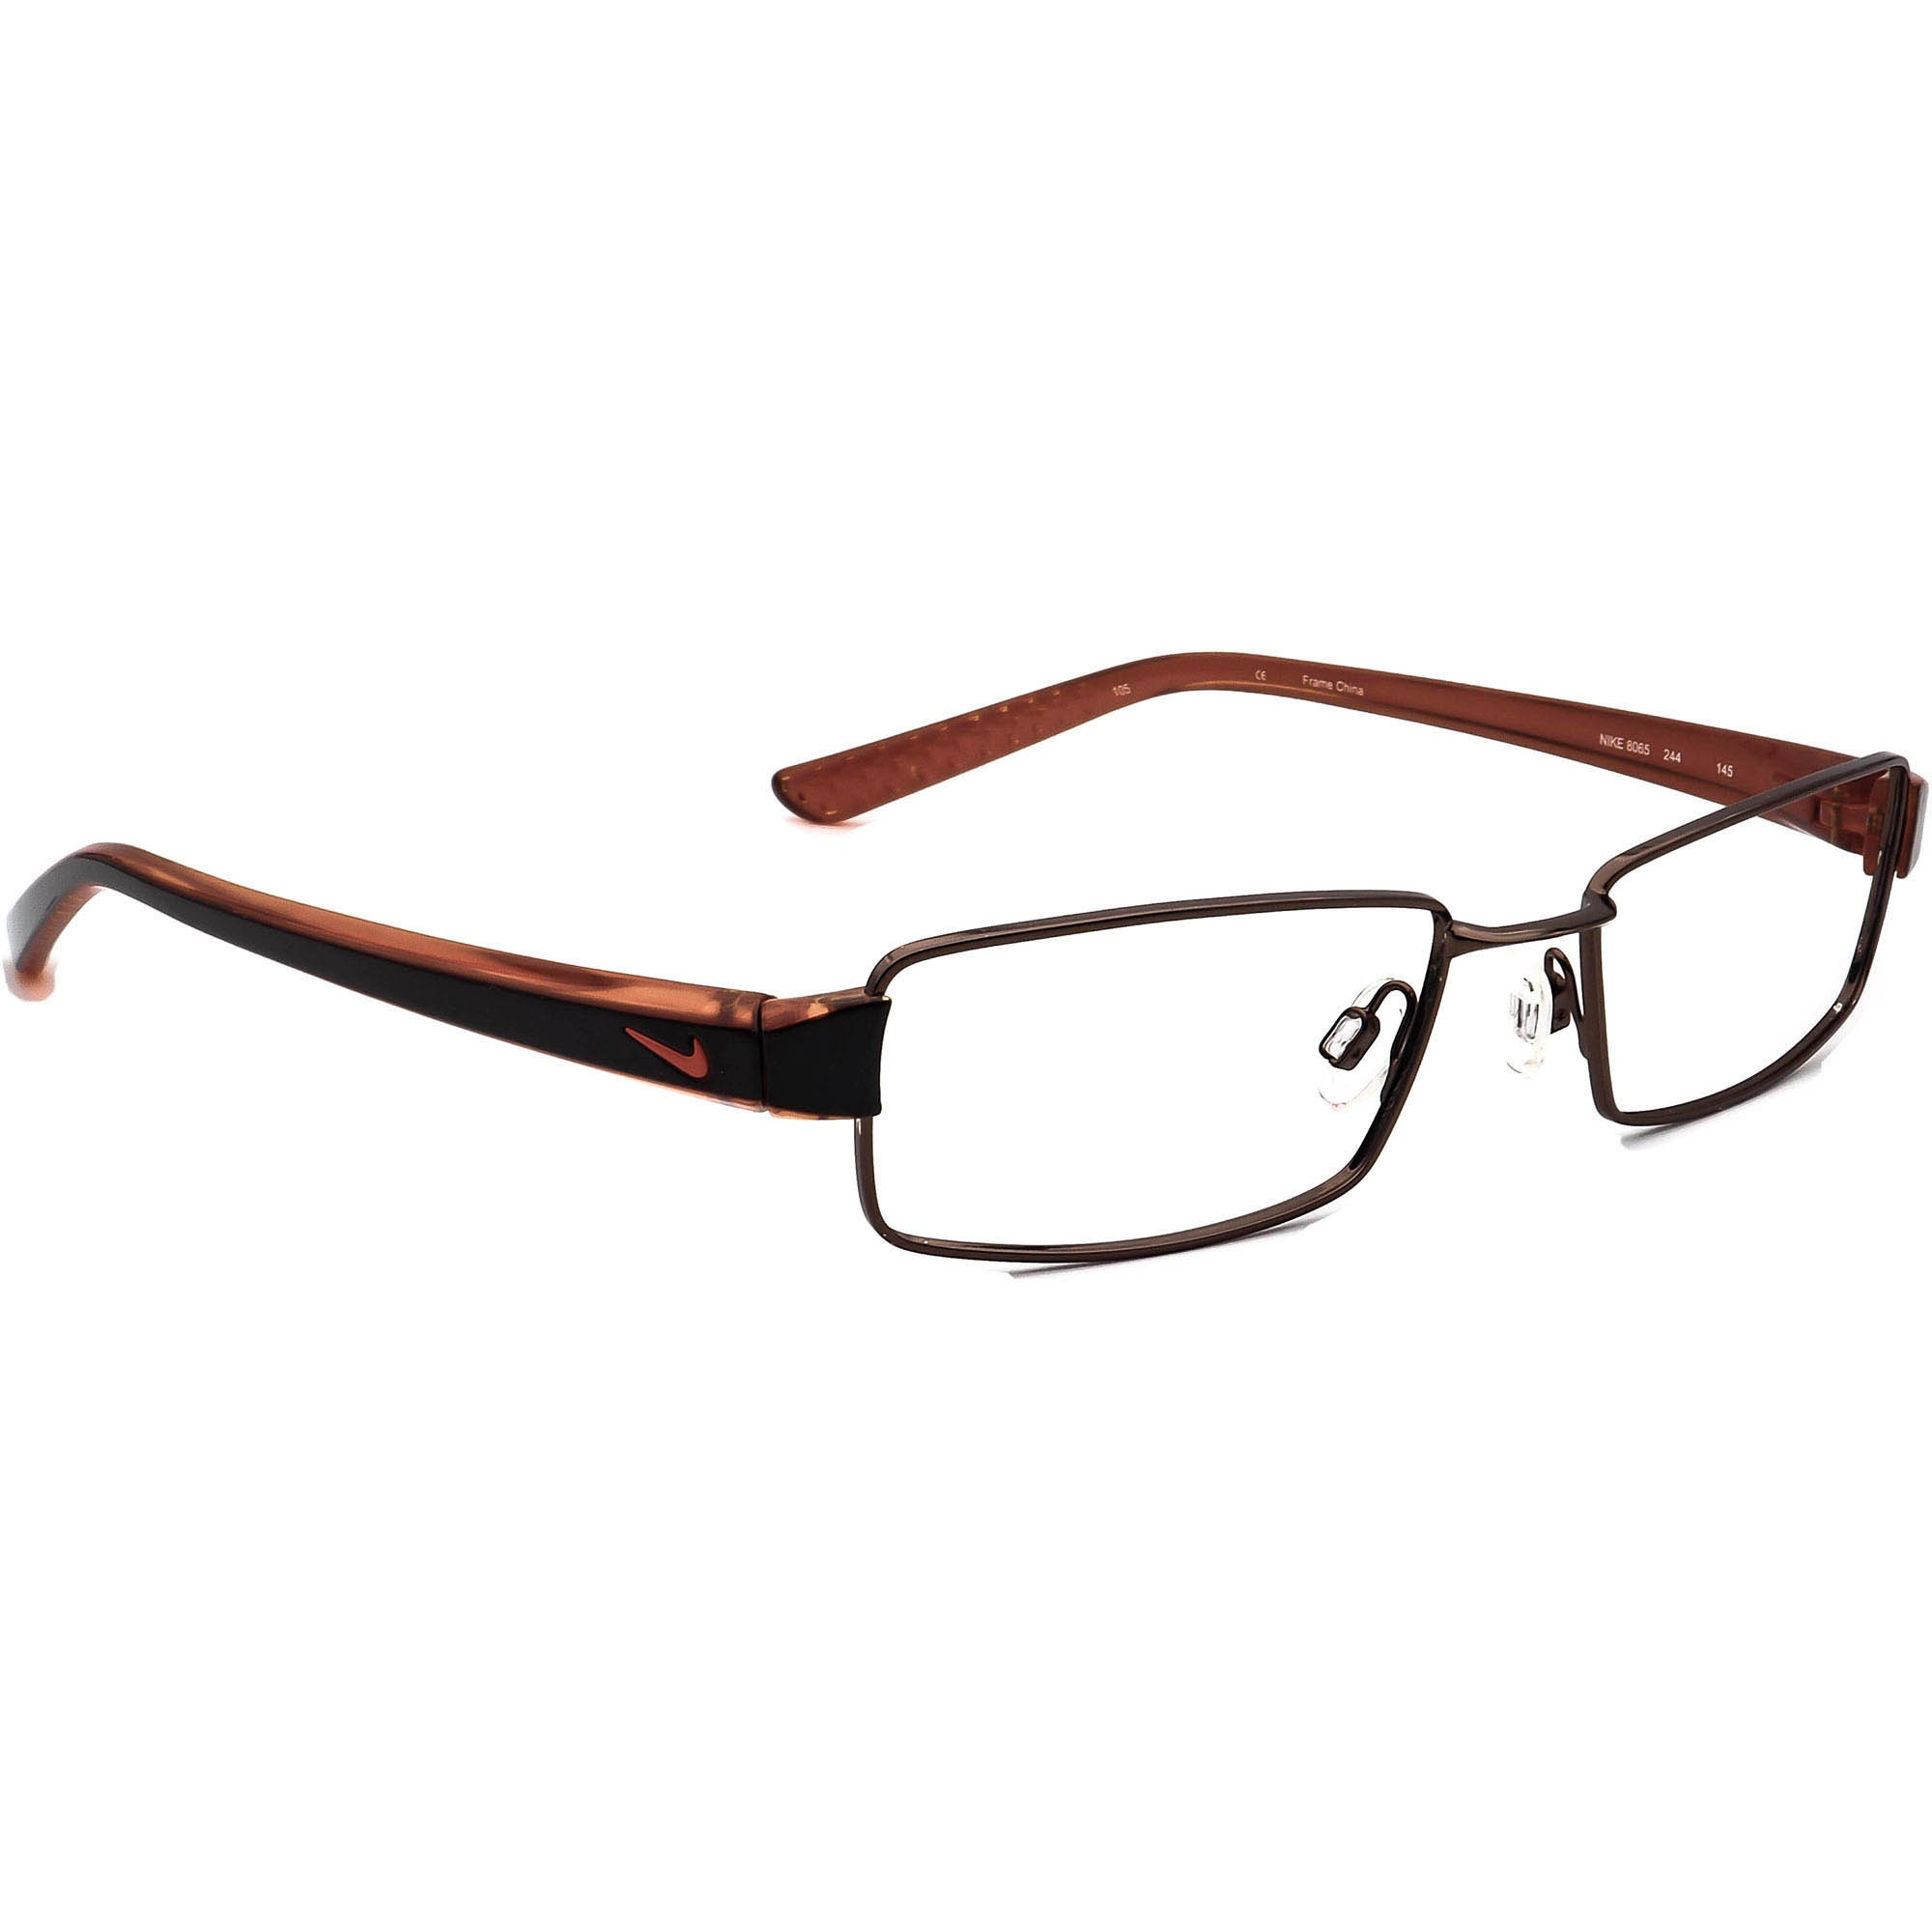 Eyeglasses 244 Marco rectangular marrón y naranja -